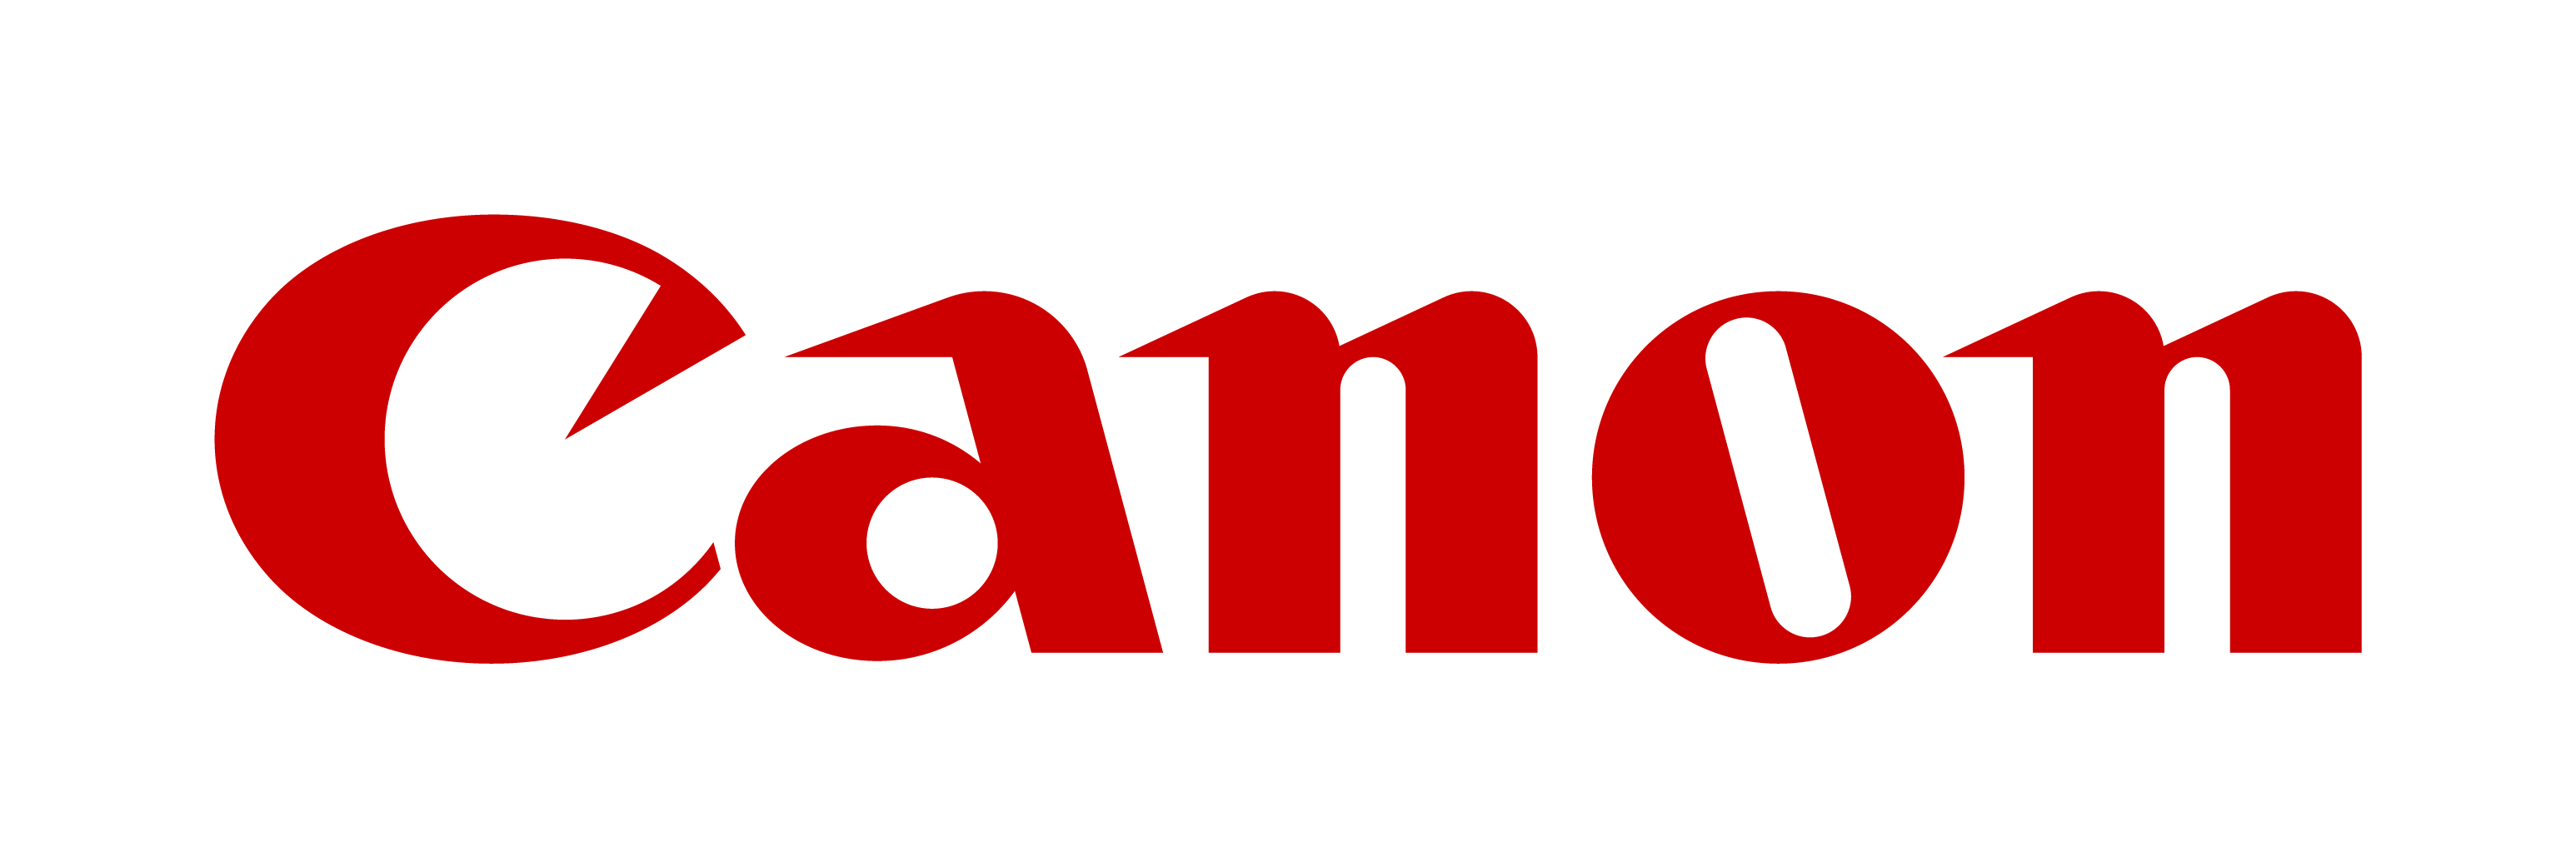 Canon Singapore Pte. Ltd. company logo